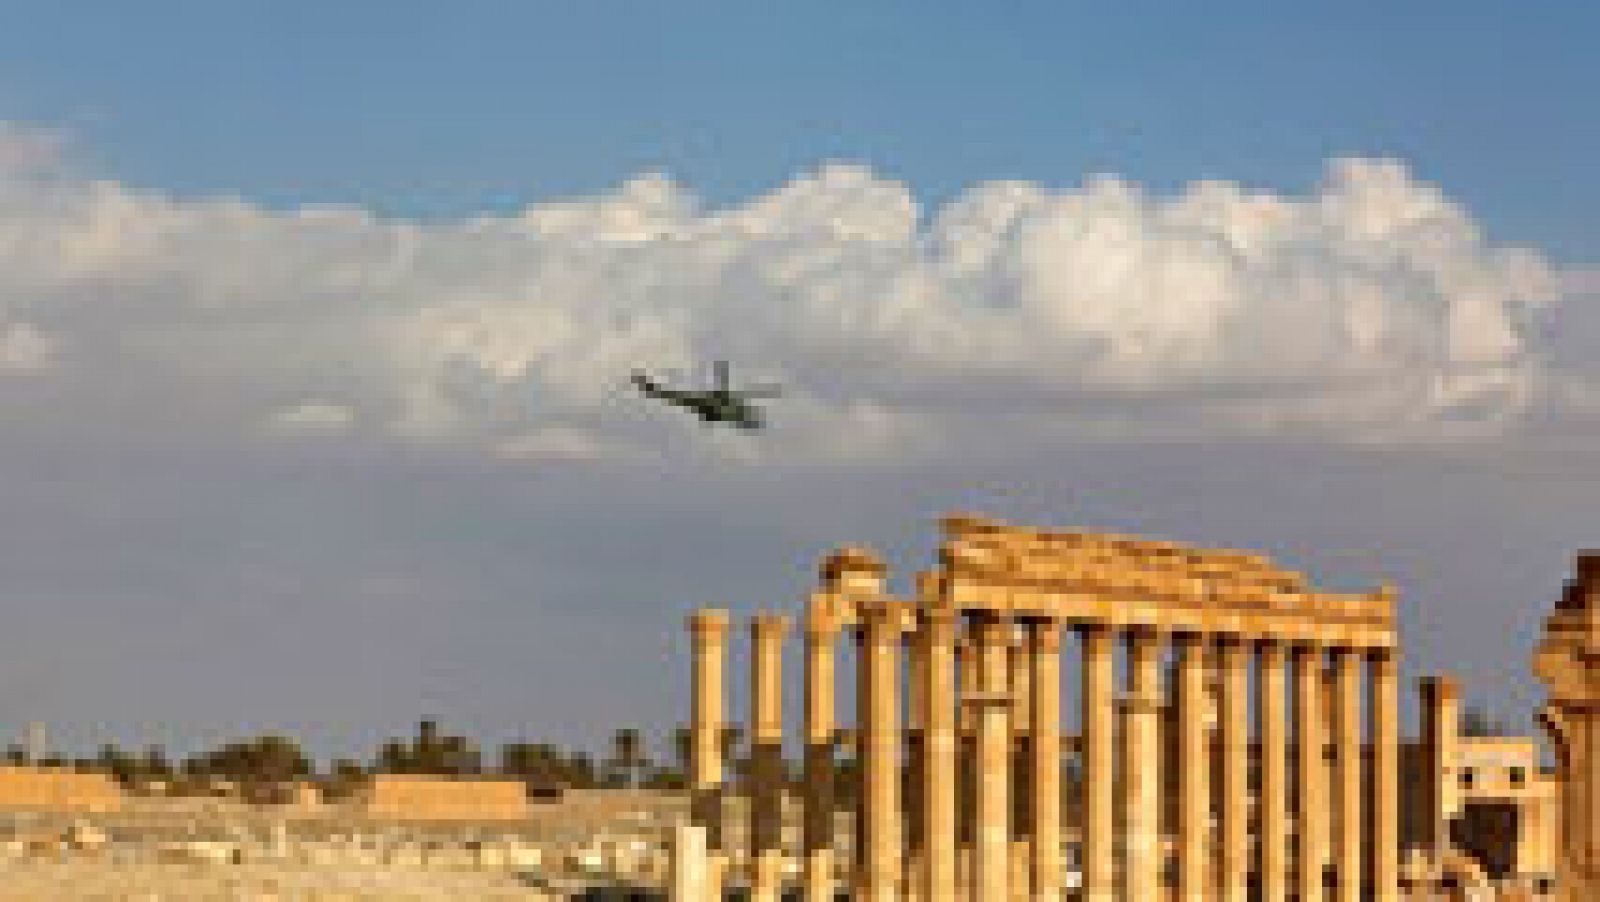 Telediario 1: Intentan recuperar el patrimonio arqueológico de Palmira | RTVE Play